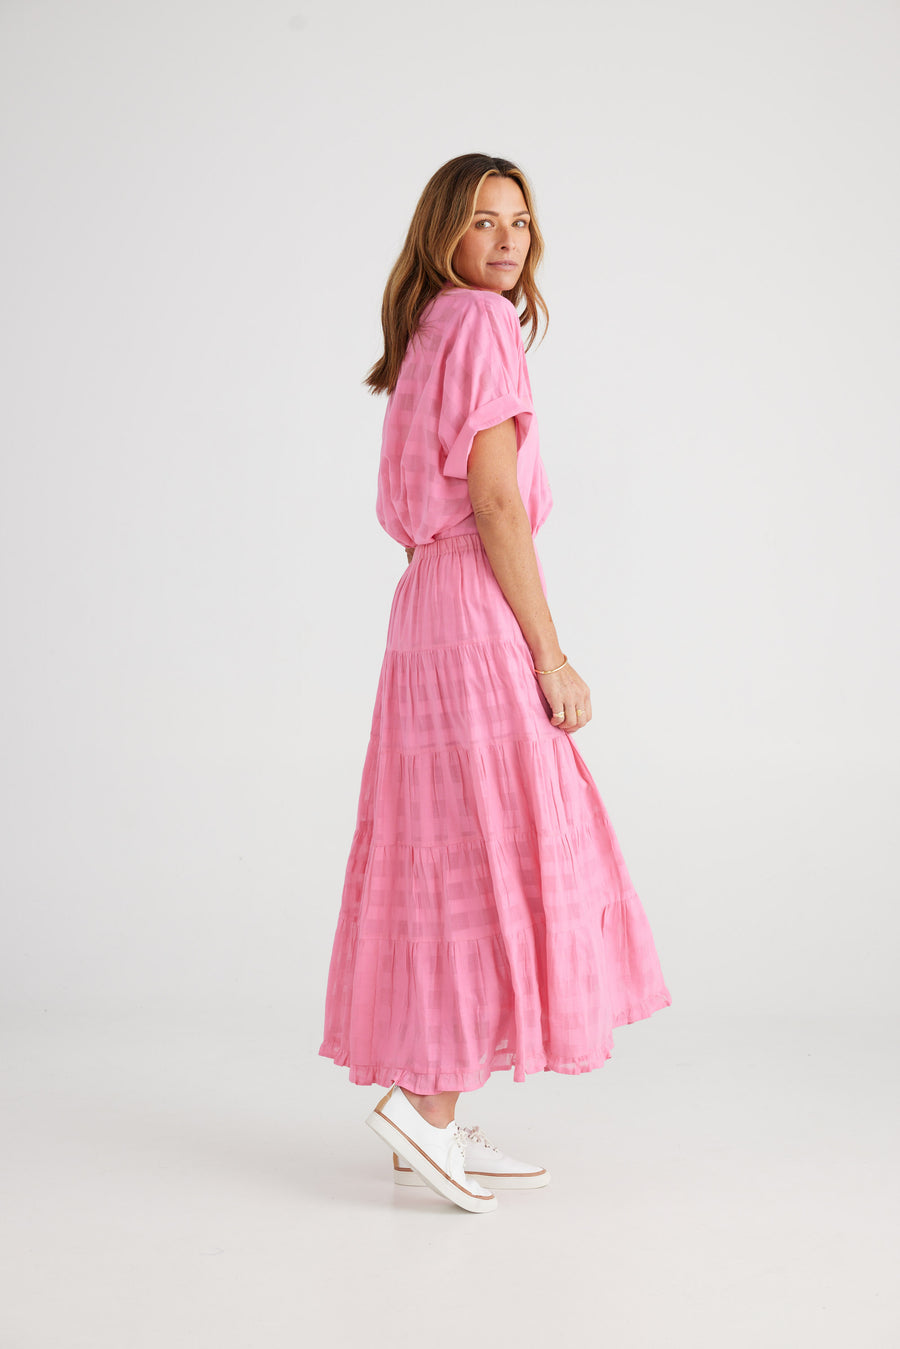 Wonderland Skirt - Pink Window Check